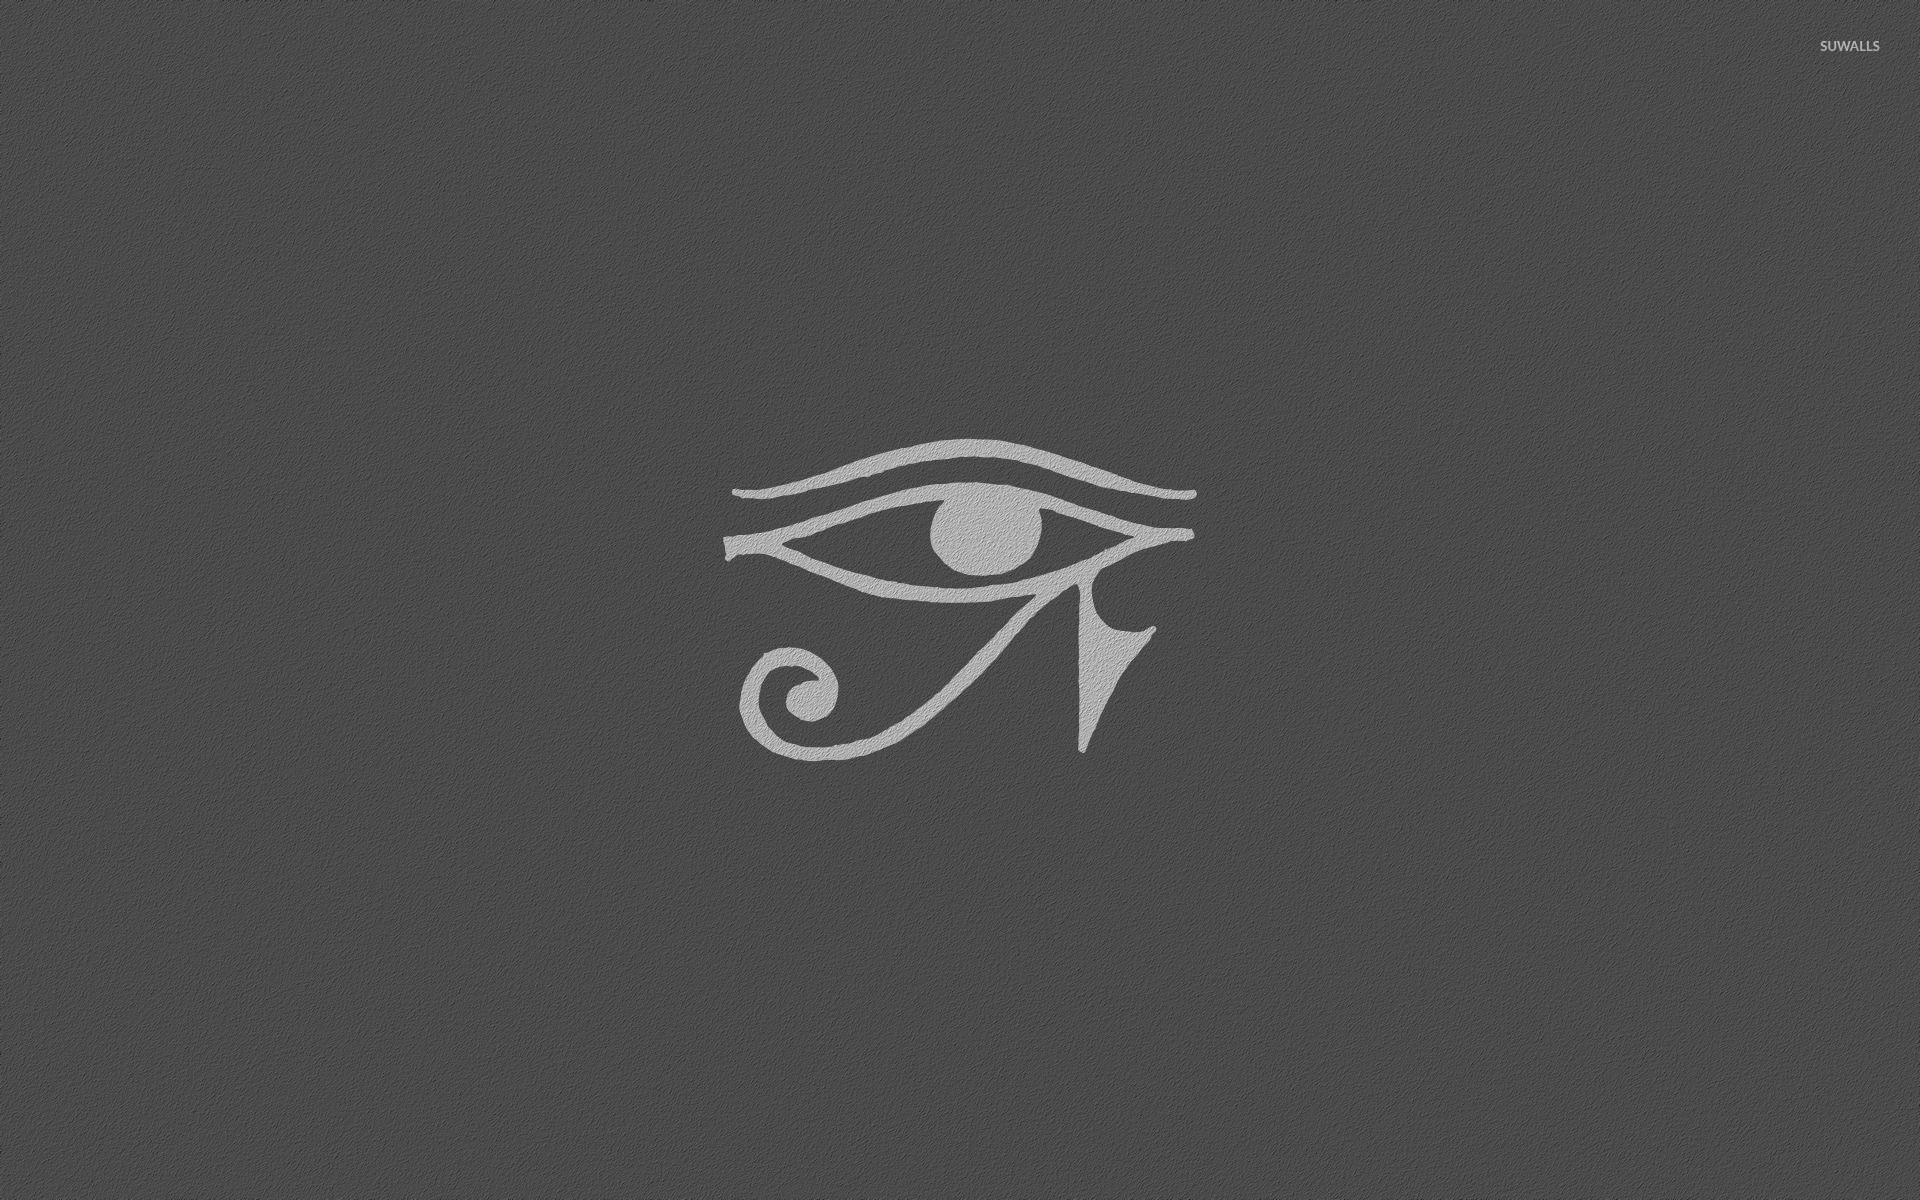 1920x1200 Eye of Horus wallpaper